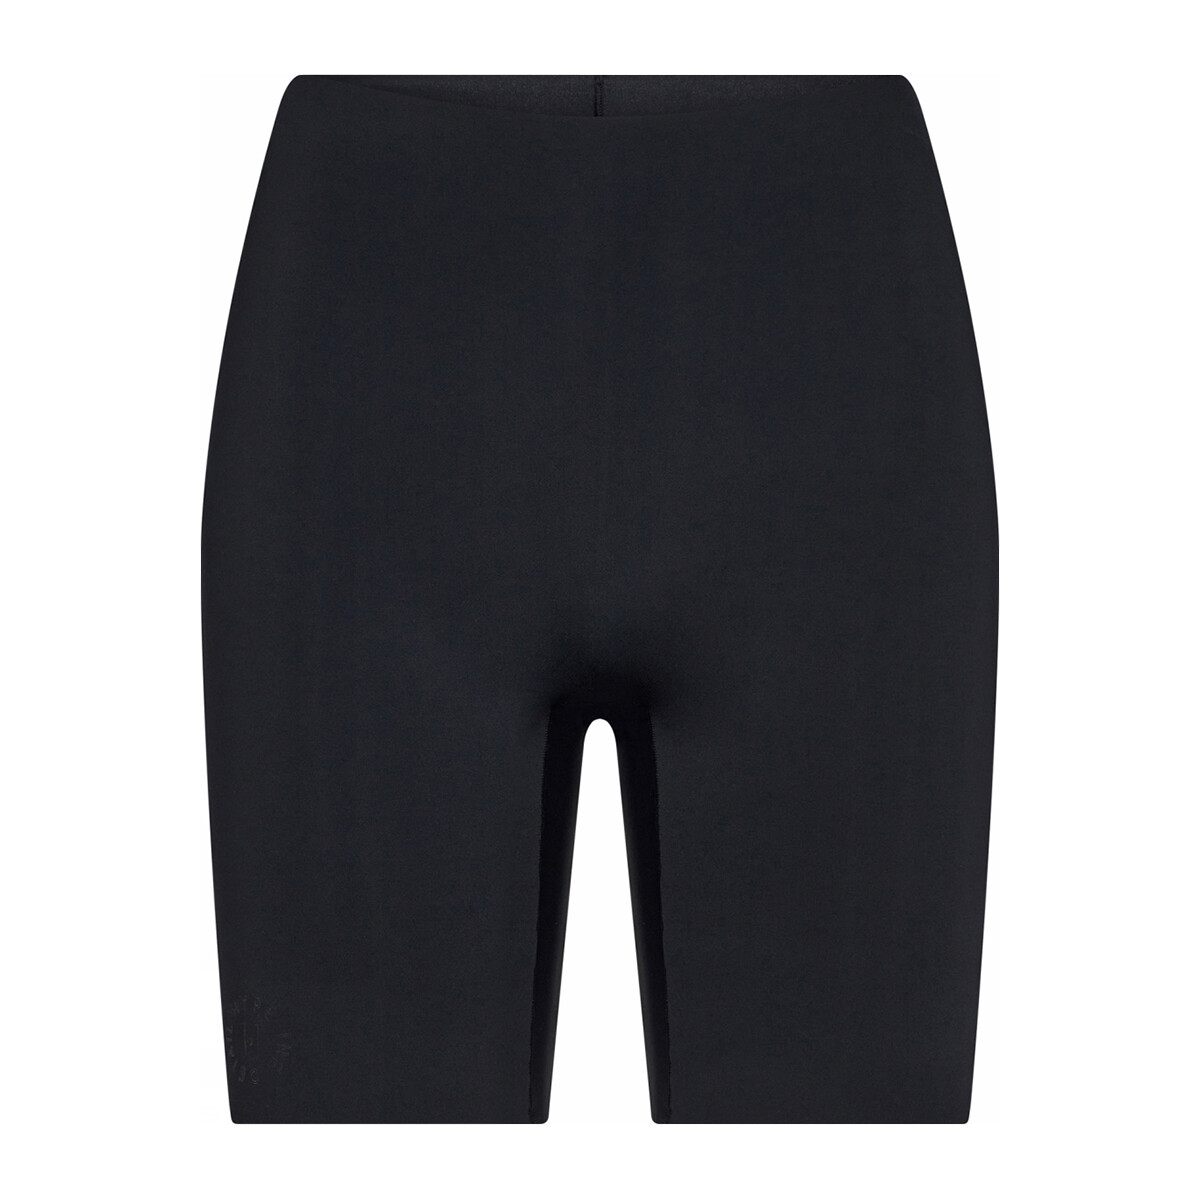 6: Hype The Detail Essentials Shorts, Farve: Sort, Størrelse: XS, Dame